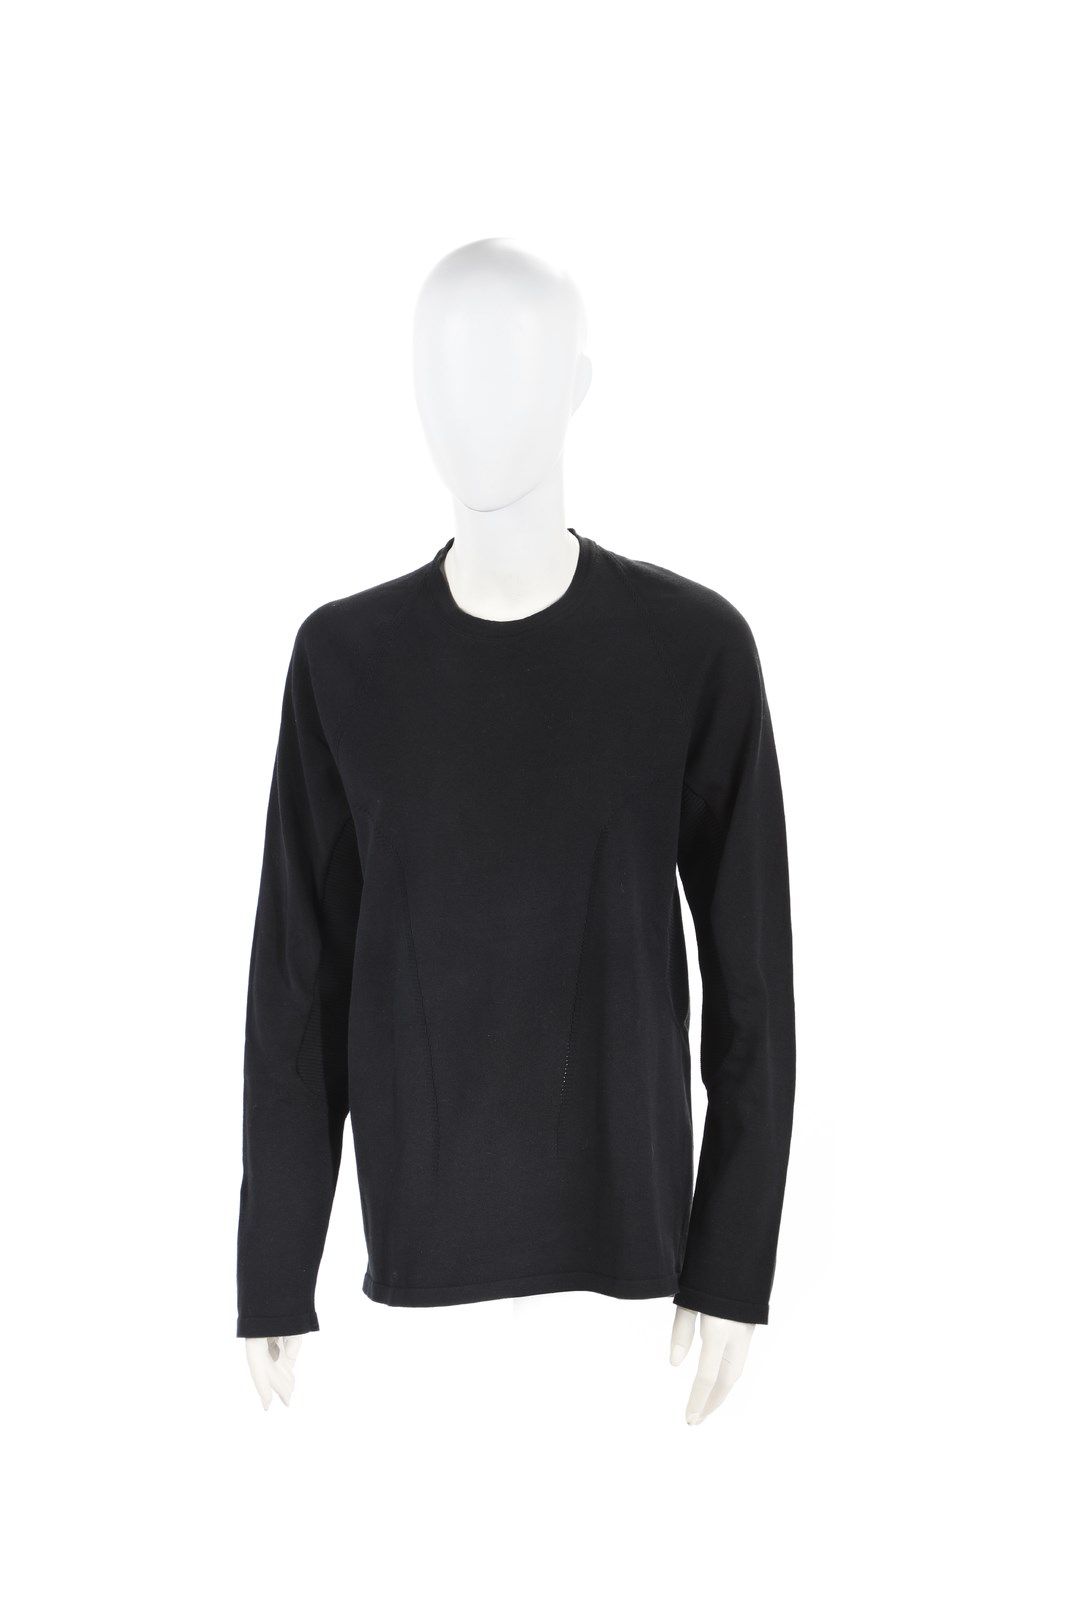 GIANFRANCO FERRE' Black wool sweater. 80's. Maglione di lana nera. 80's. Lana...&hellip;